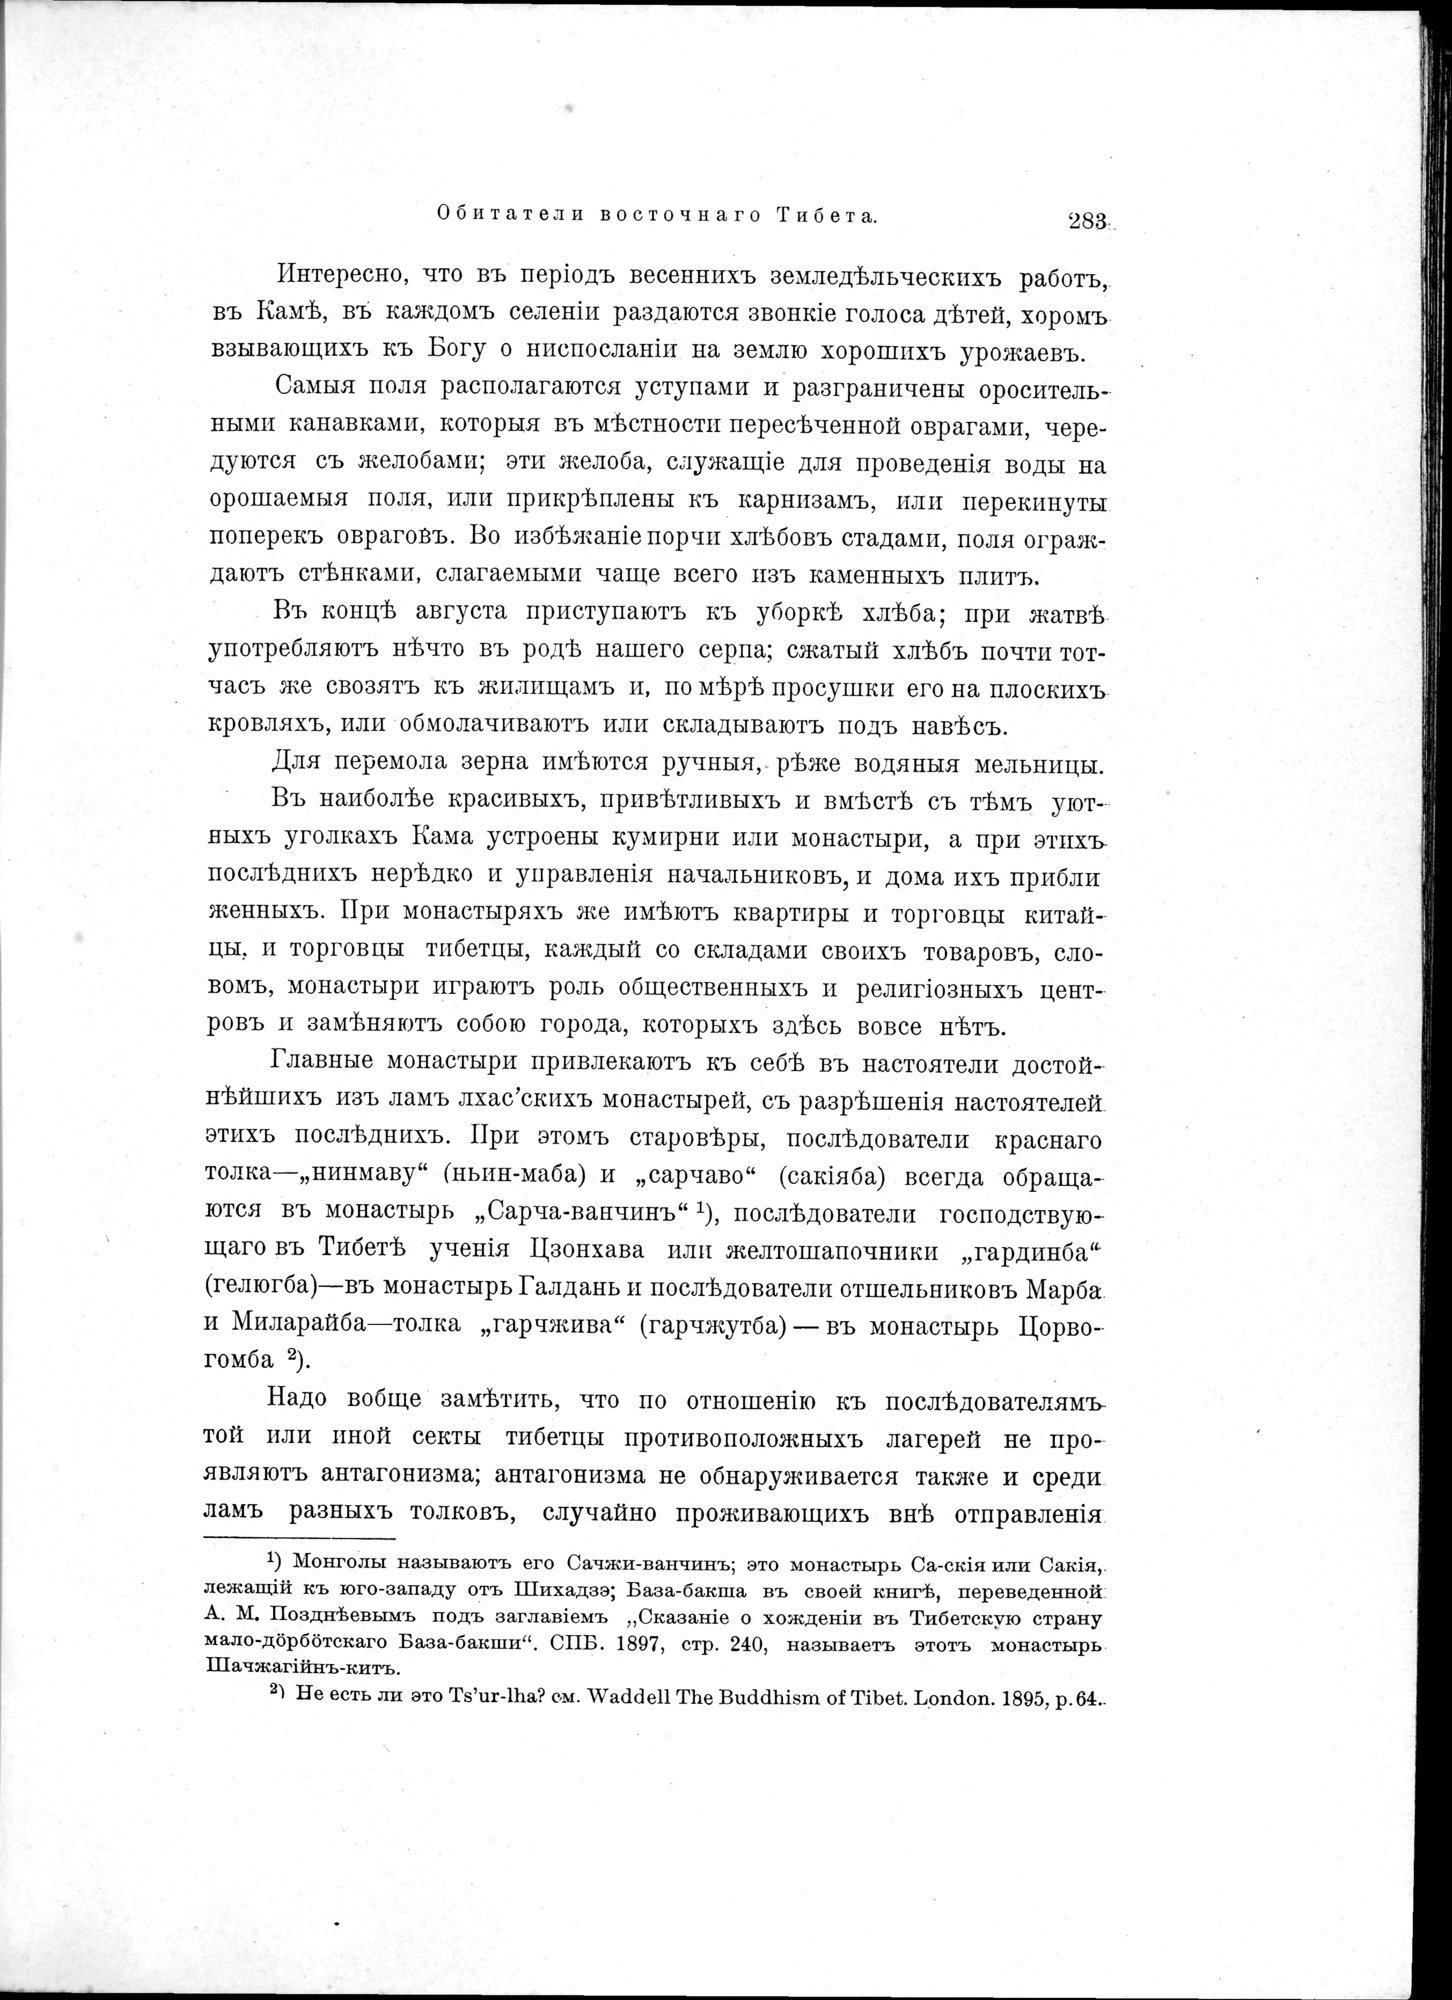 Mongoliia i Kam : vol.2 / Page 47 (Grayscale High Resolution Image)